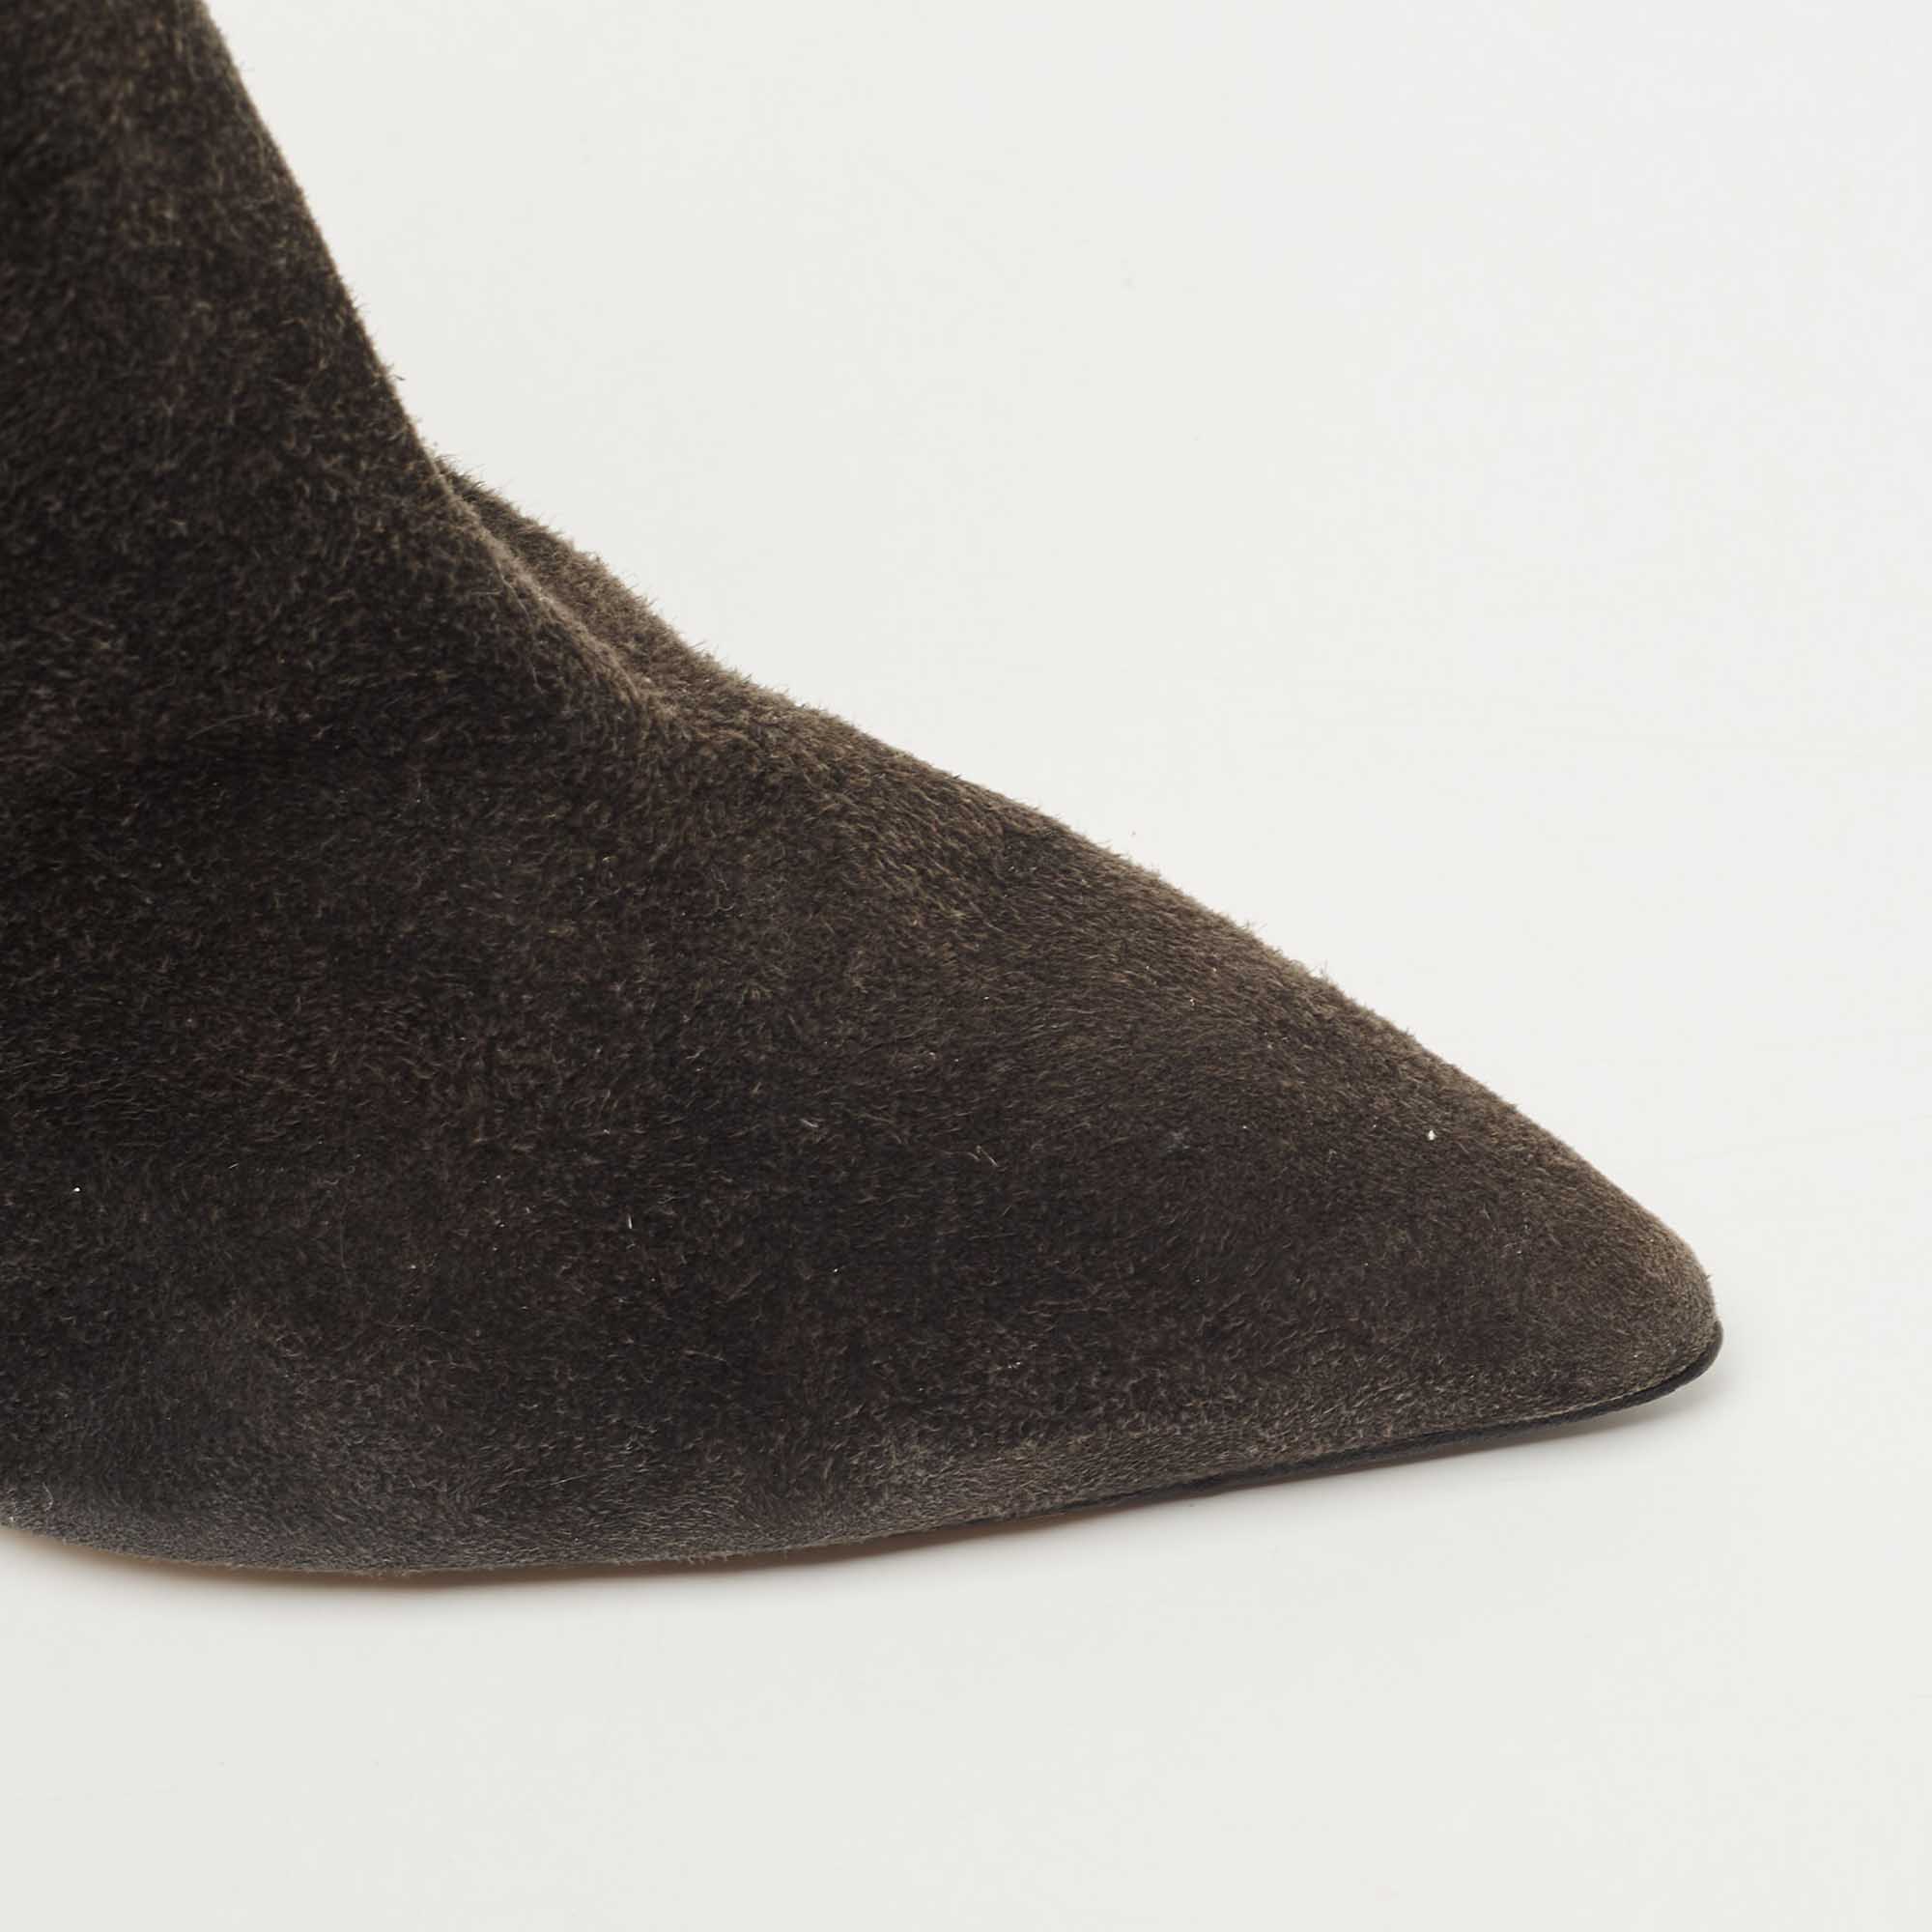 Manolo Blahnik Black Suede Baylow Ankle Boots Size 38.5